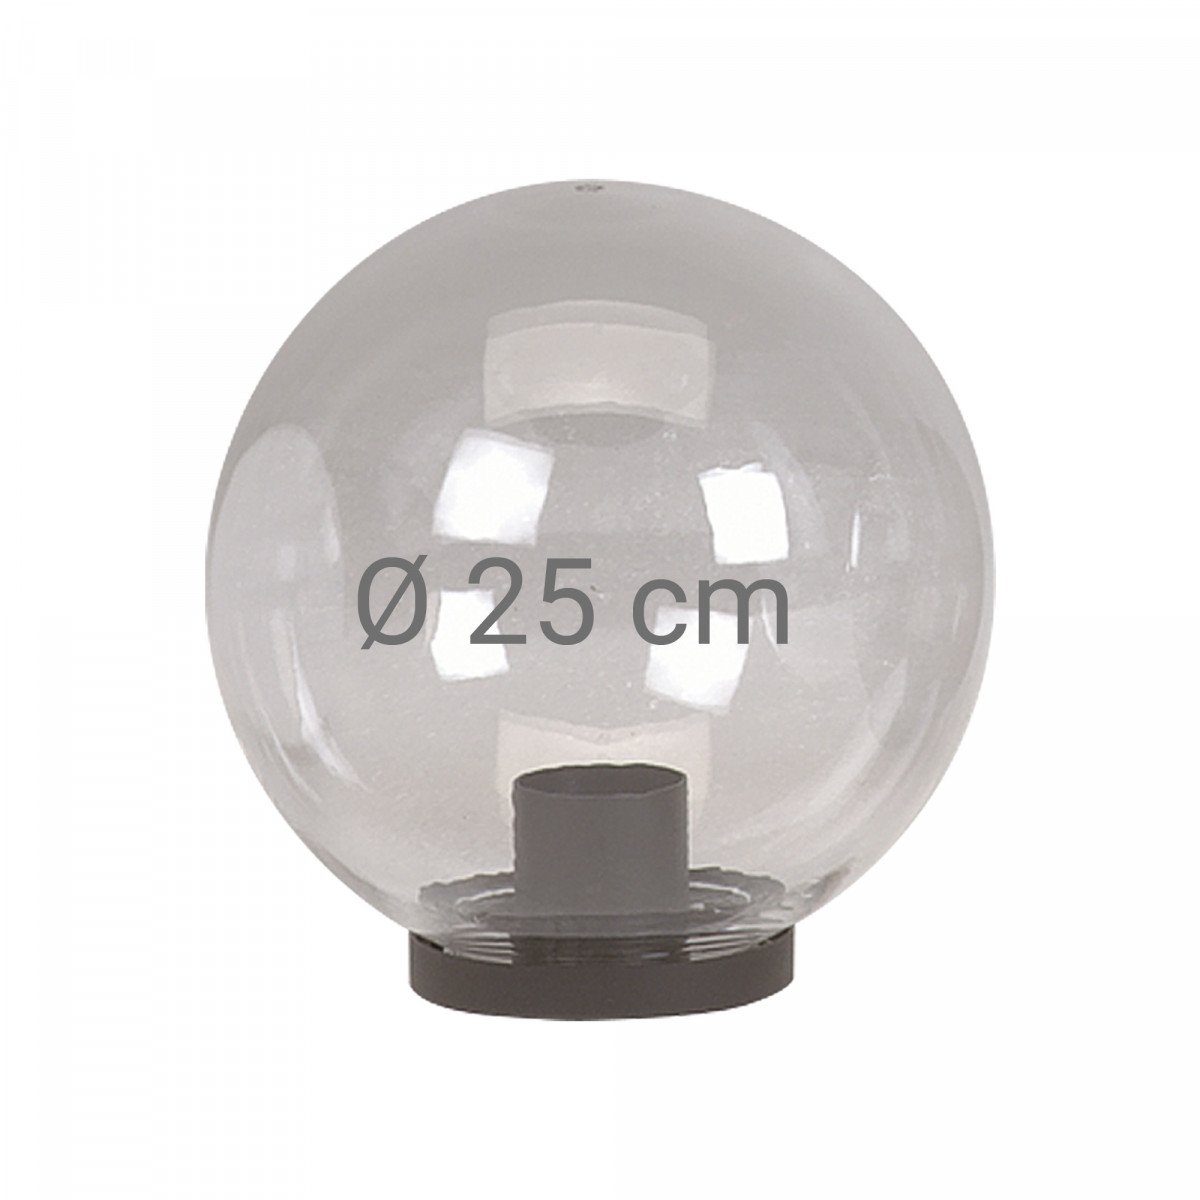 Globe transparent  de 25 cm de diamètre avec collerette (3757) de KS Lighting